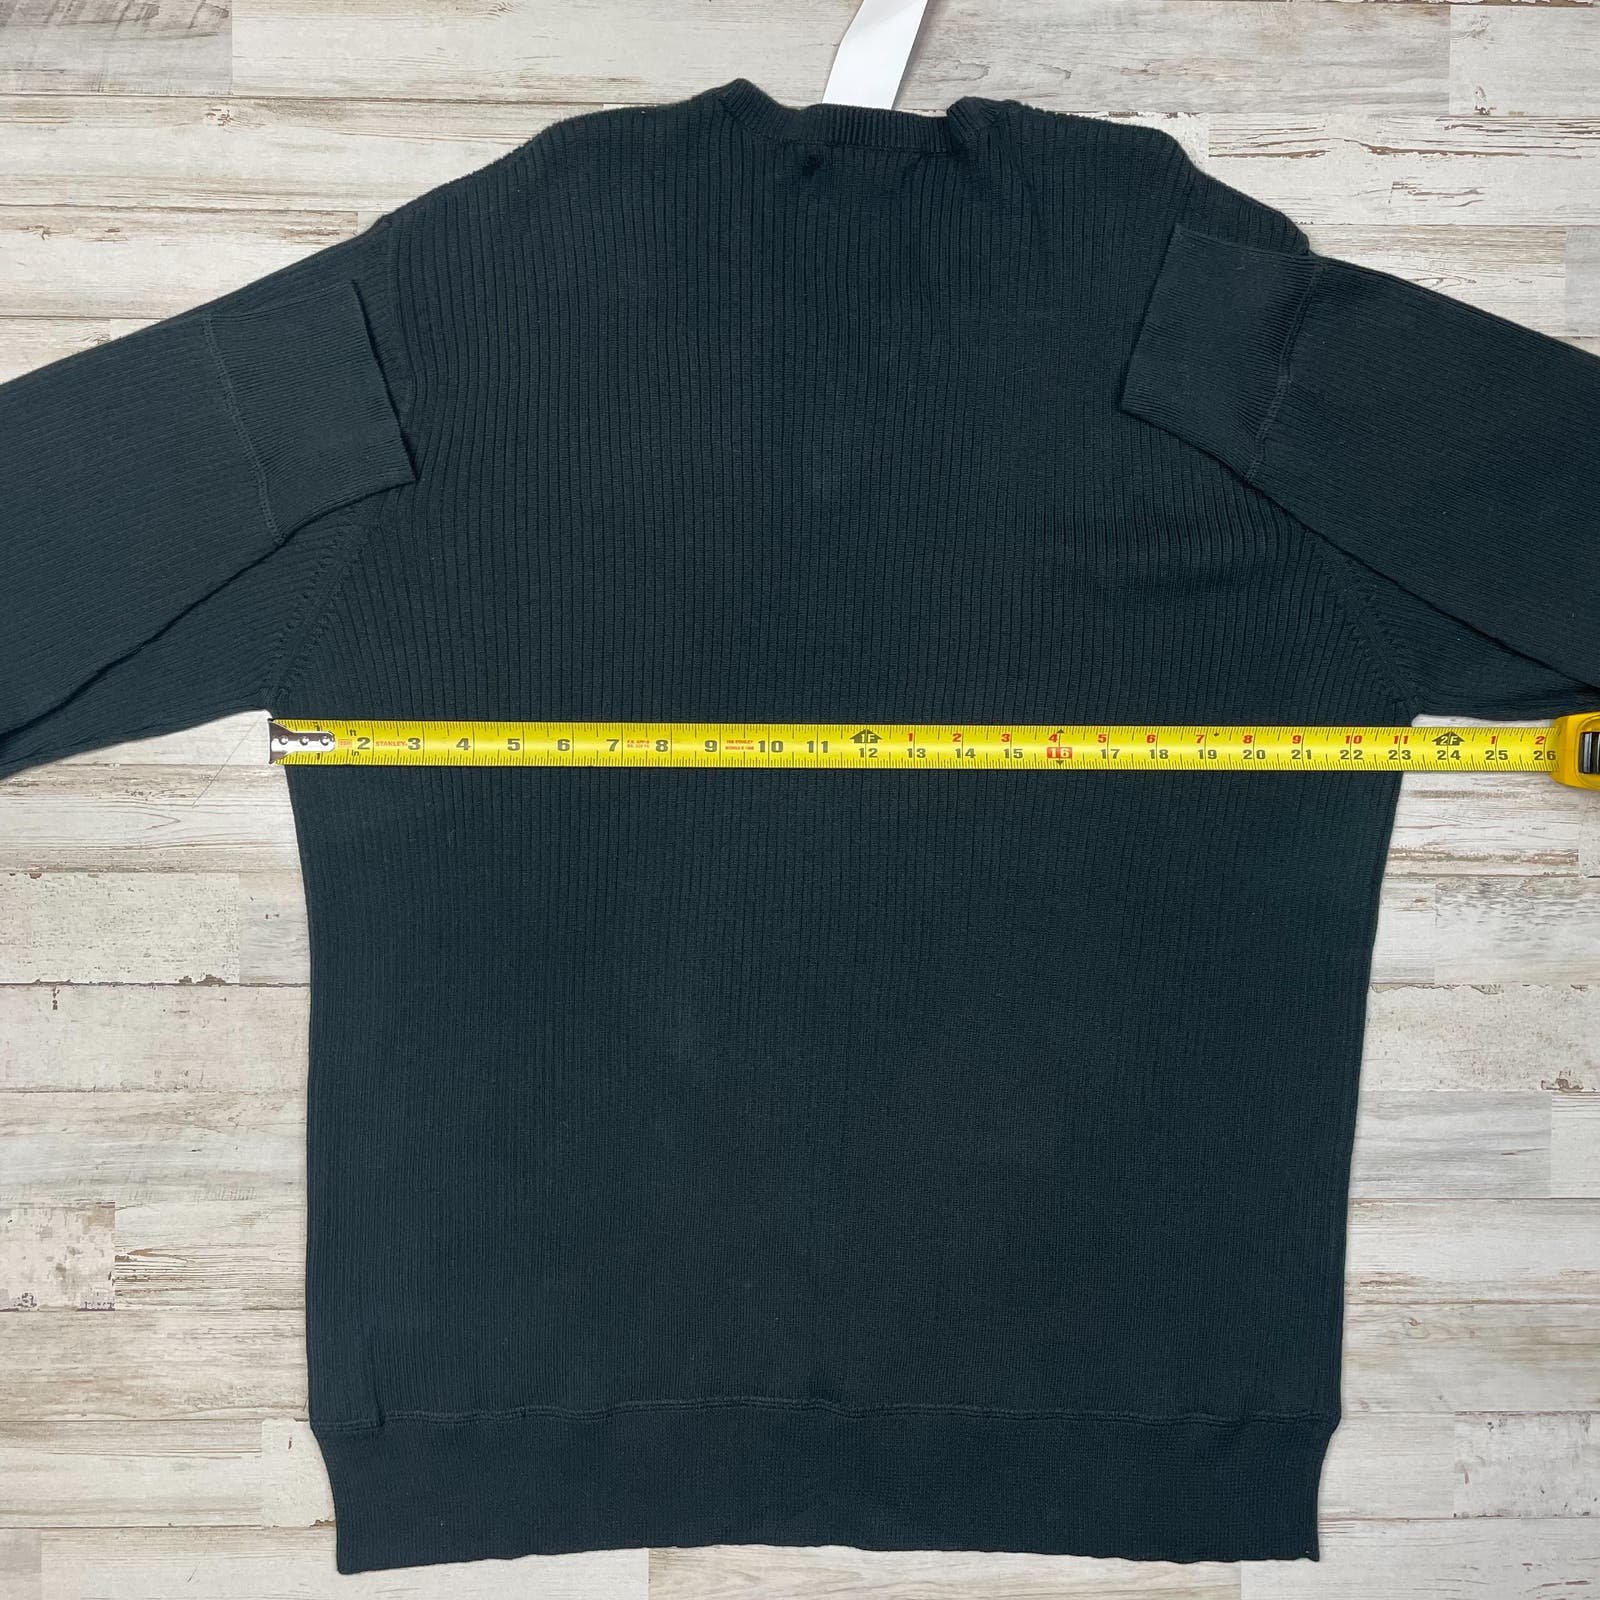 The Best Seller Gap Black 100% Cotton LS V Neck Sweater SZ XXL C101647 NkE46ycfB best sale